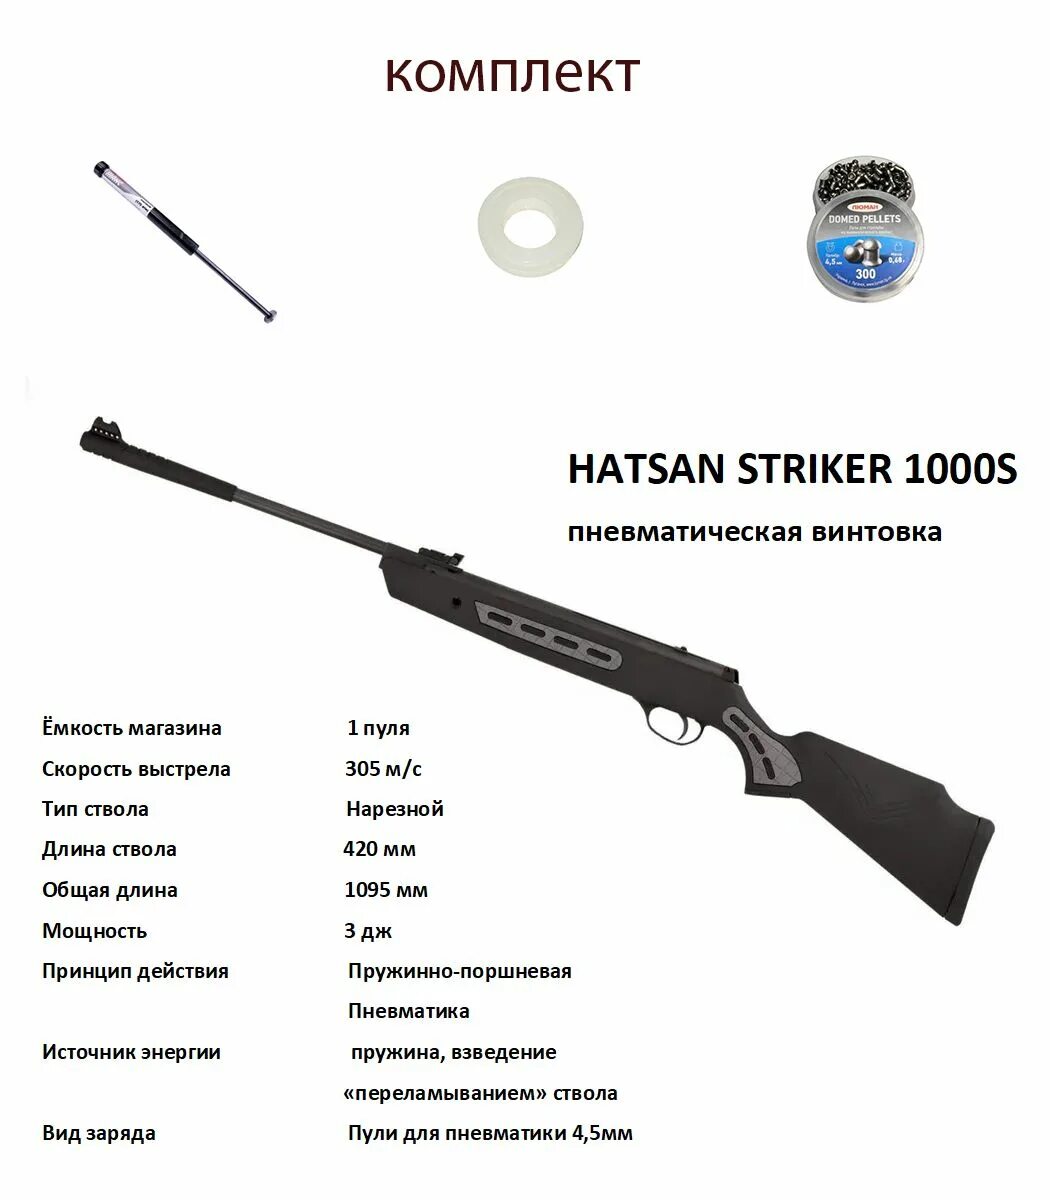 Пневматическая винтовка Hatsan Striker 1000s. Пневматическая винтовка Hatsan 1000 s характеристики. Хатсан Страйкер 1000. Пневматическая винтовка Хатсан Страйкер характеристики. Хатсан страйкер цена